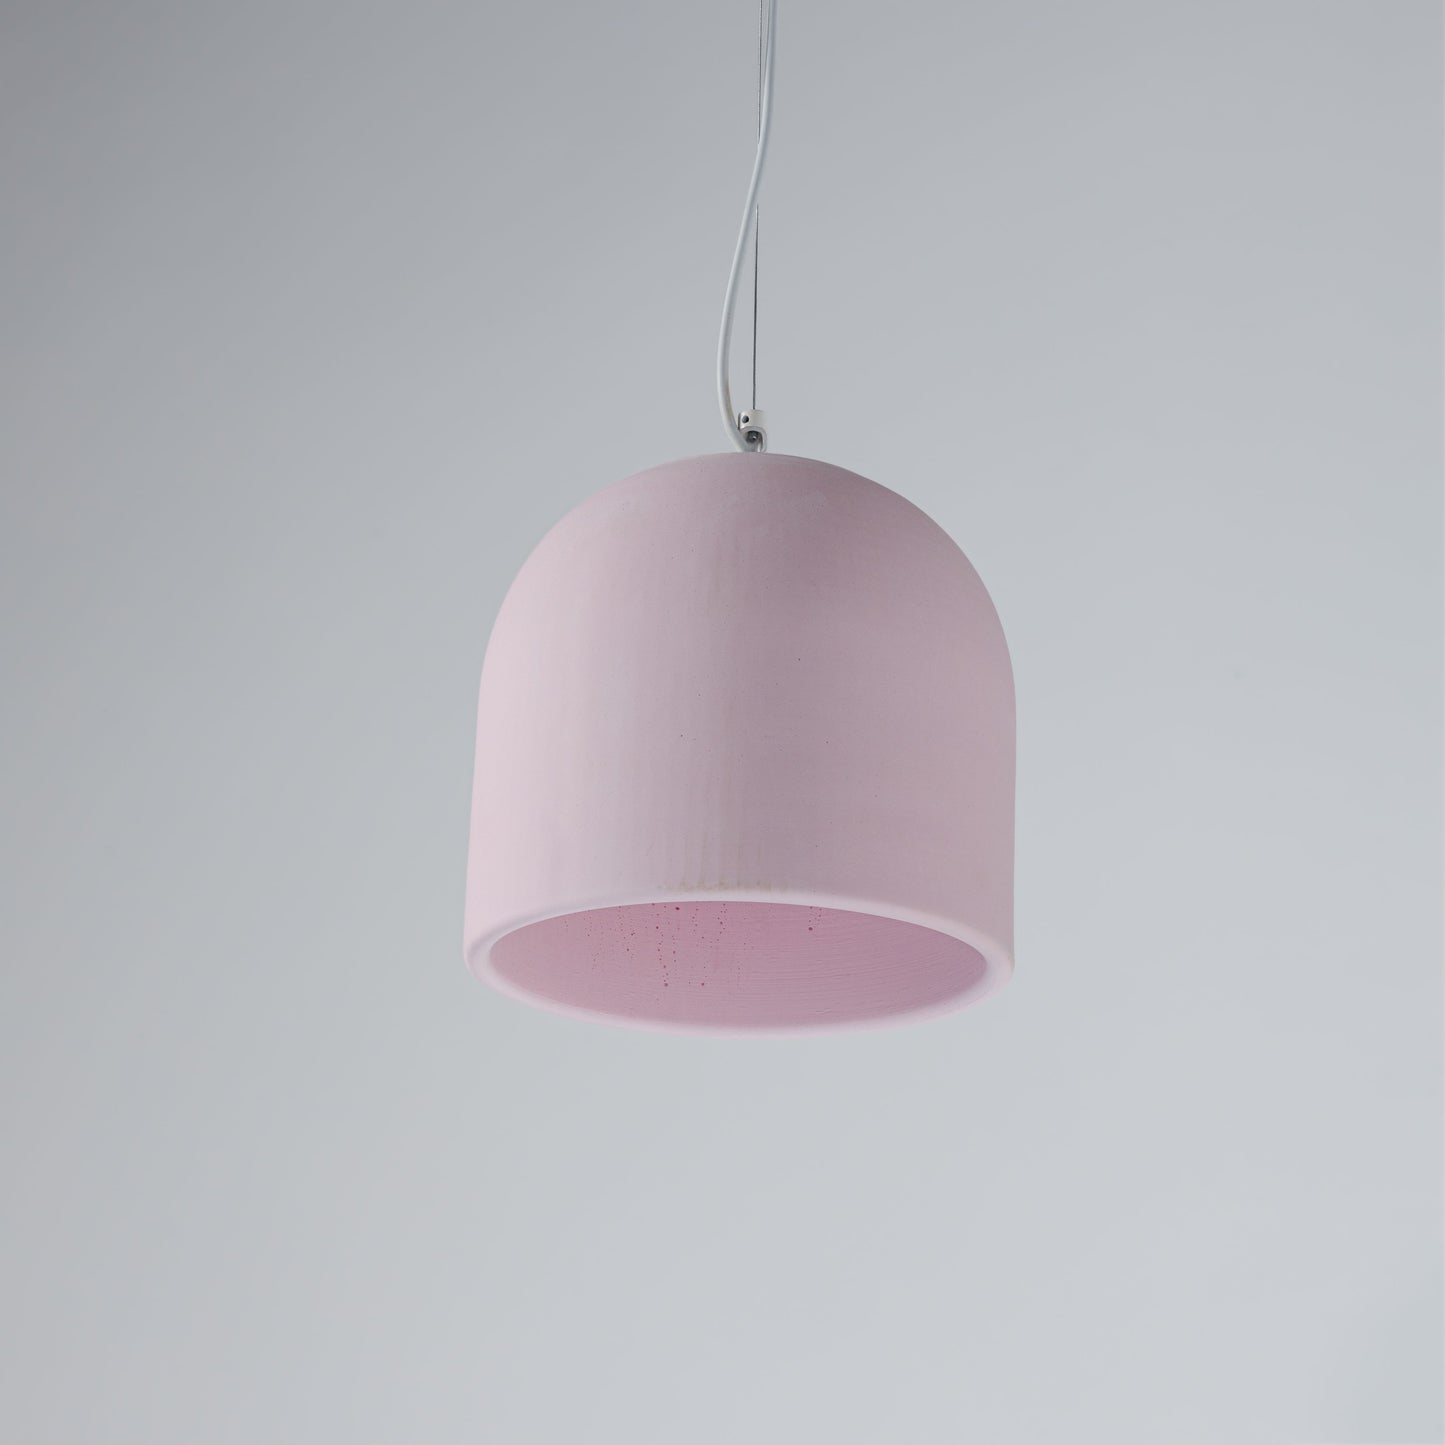 Large Pink Concrete Pendant Lamp, Modern Pendant Lamp